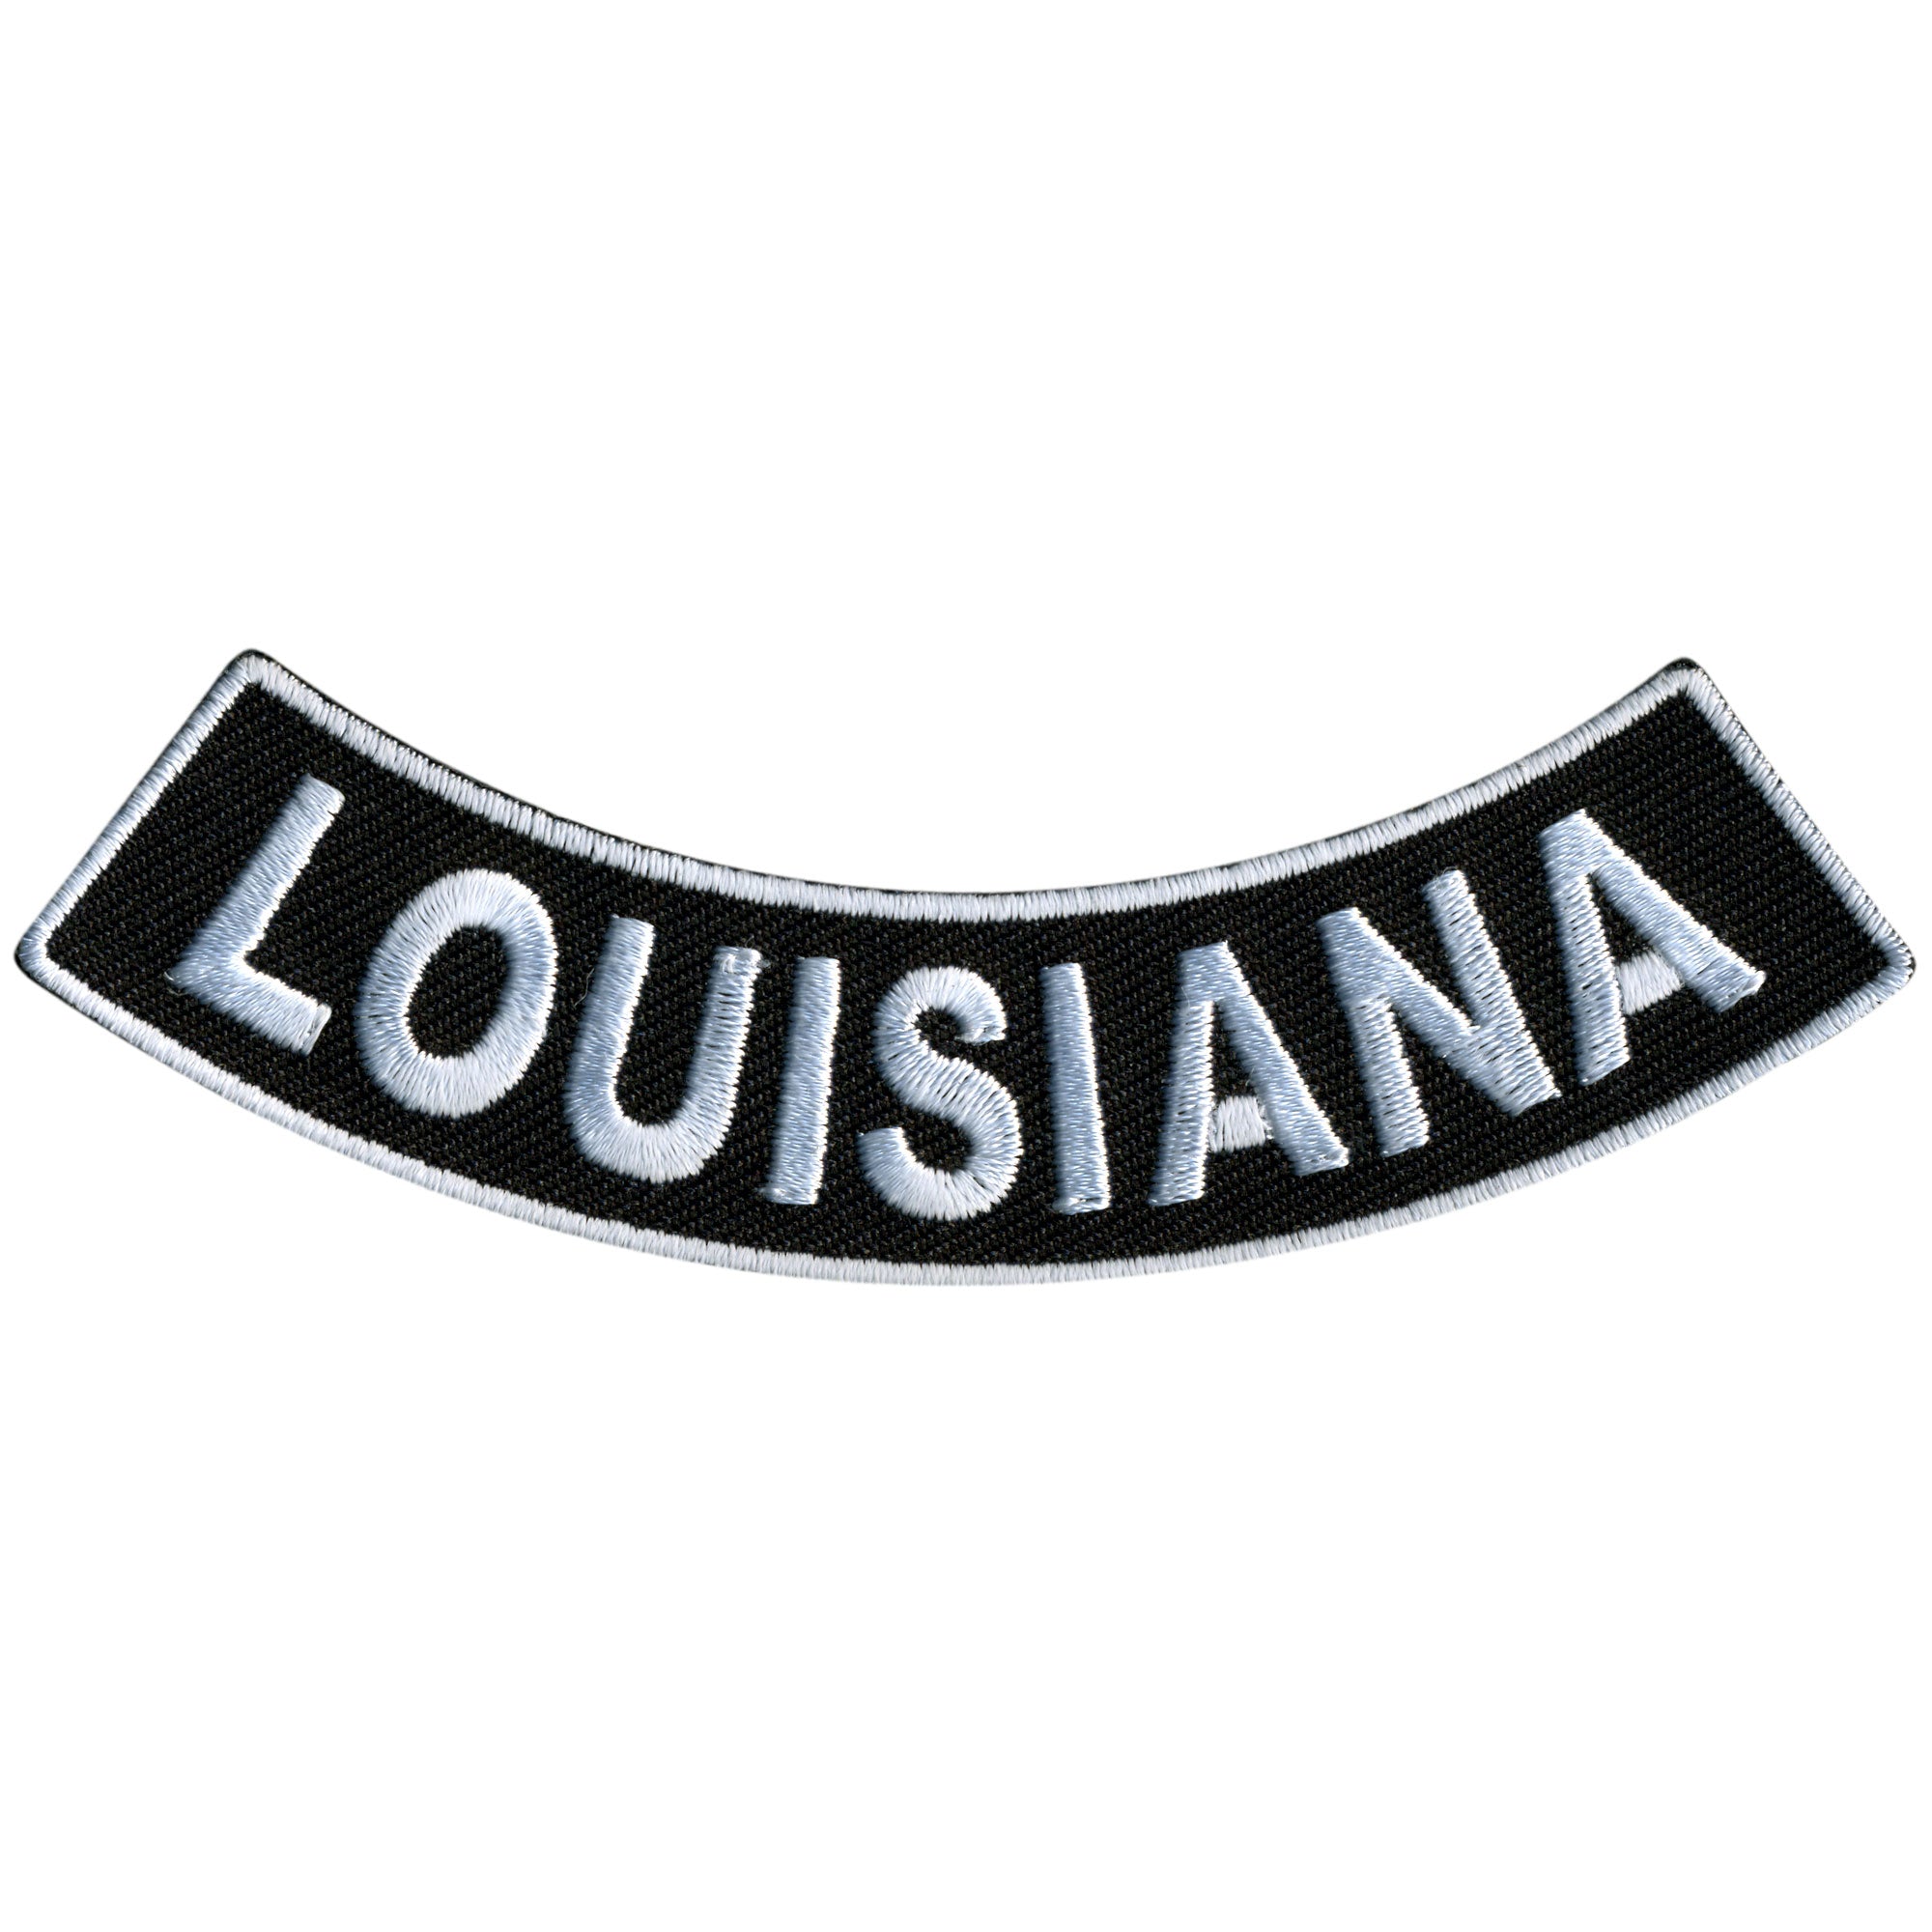 Hot Leathers Louisiana 4” X 1” Bottom Rocker Patch